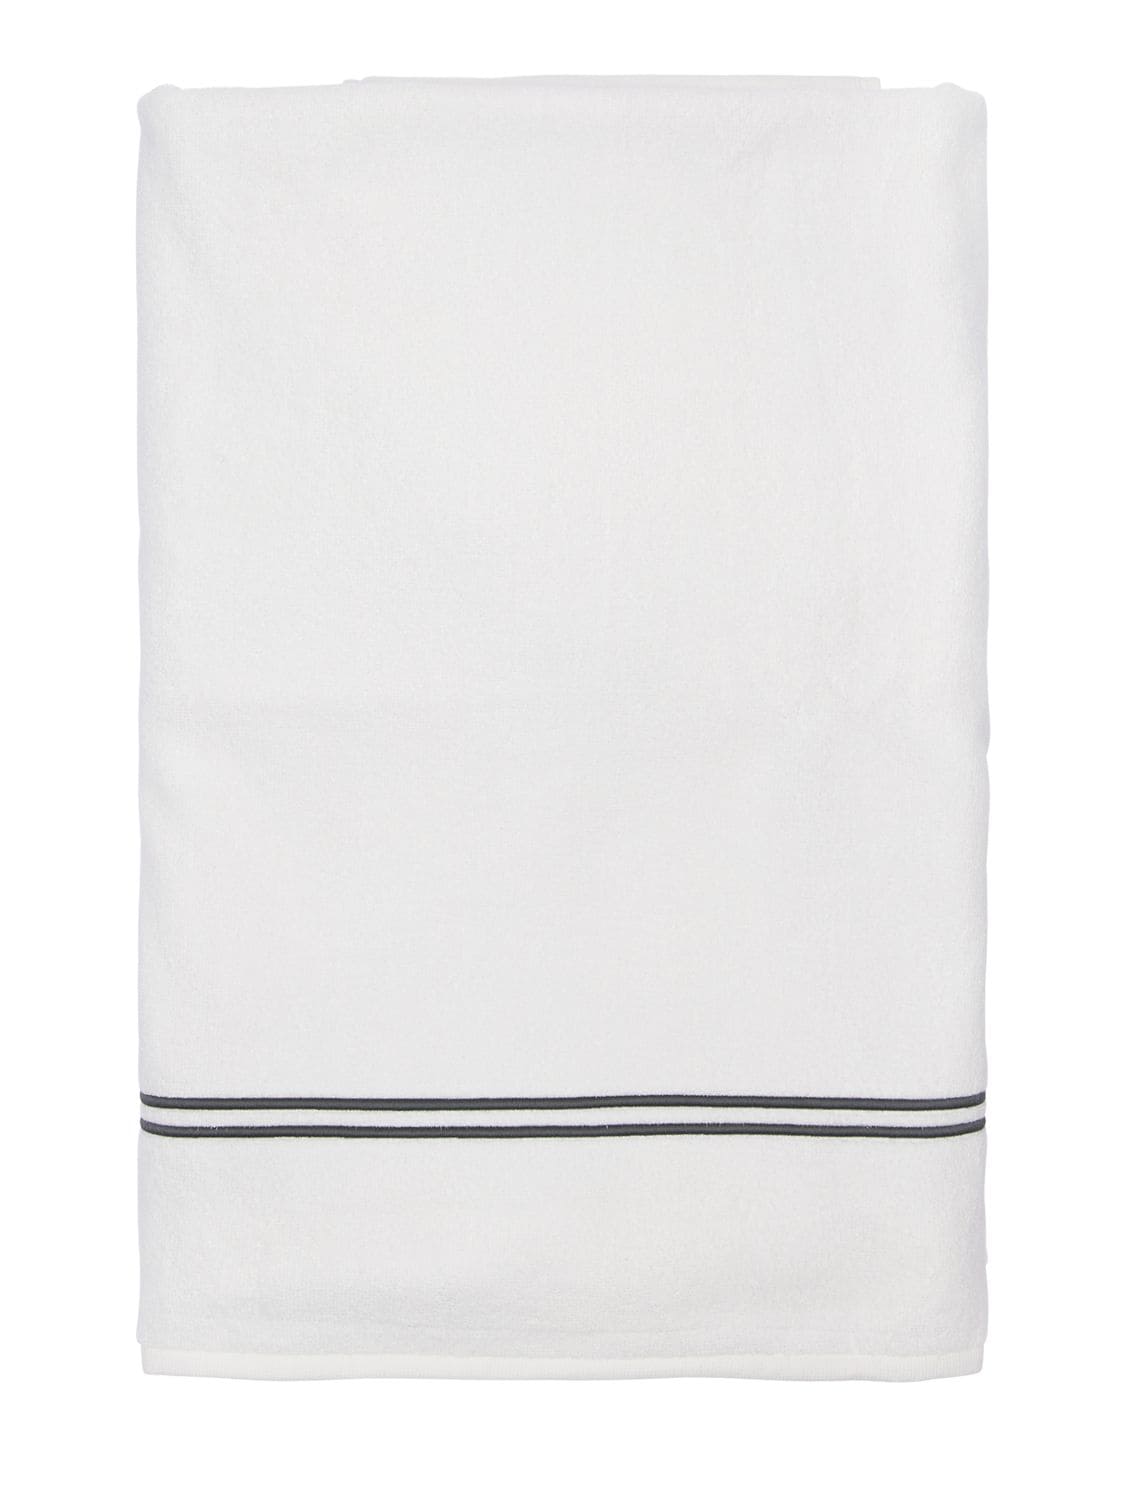 Frette Hotel Classic Large Bath Towel In White,grey